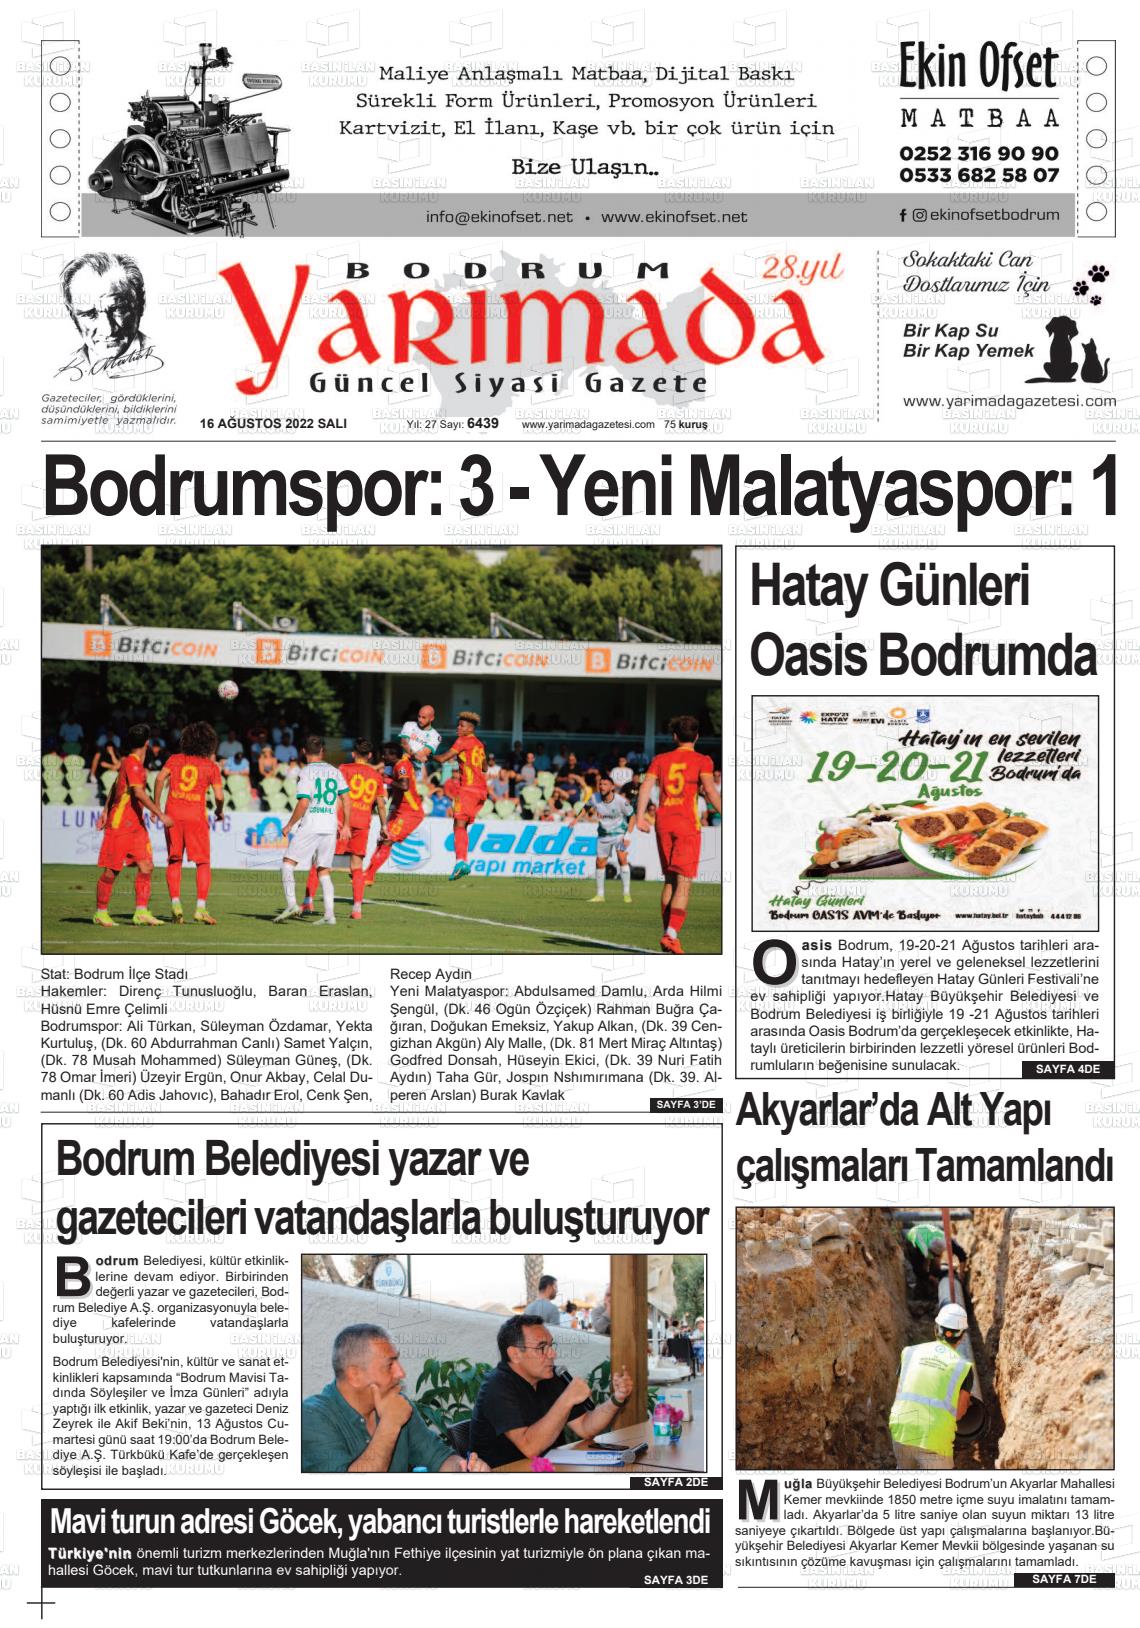 16 Ağustos 2022 Bodrum Yarimada Gazete Manşeti